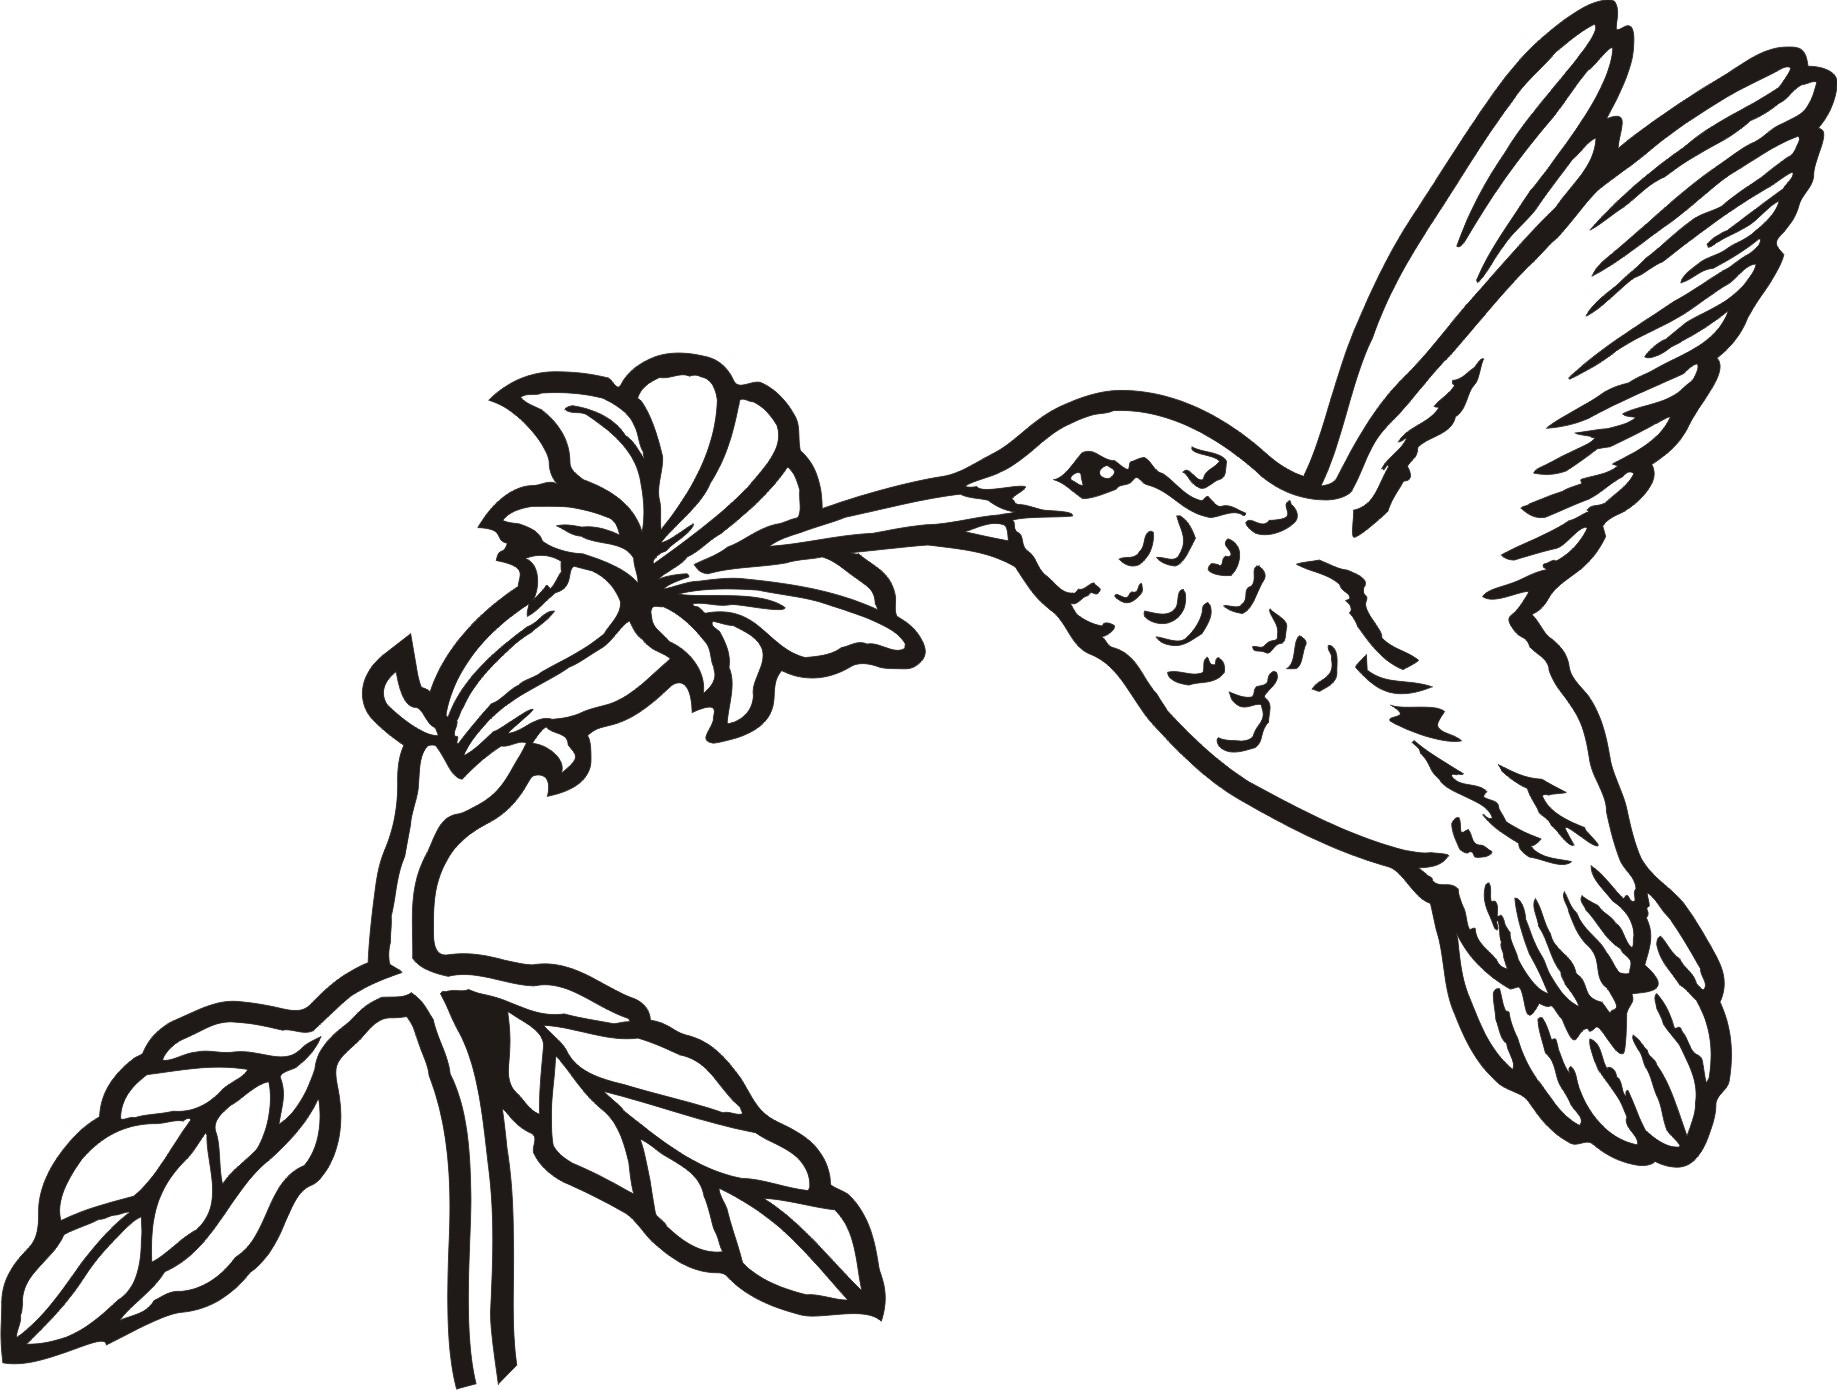 Hummingbird clipart flower drawing, Hummingbird flower drawing